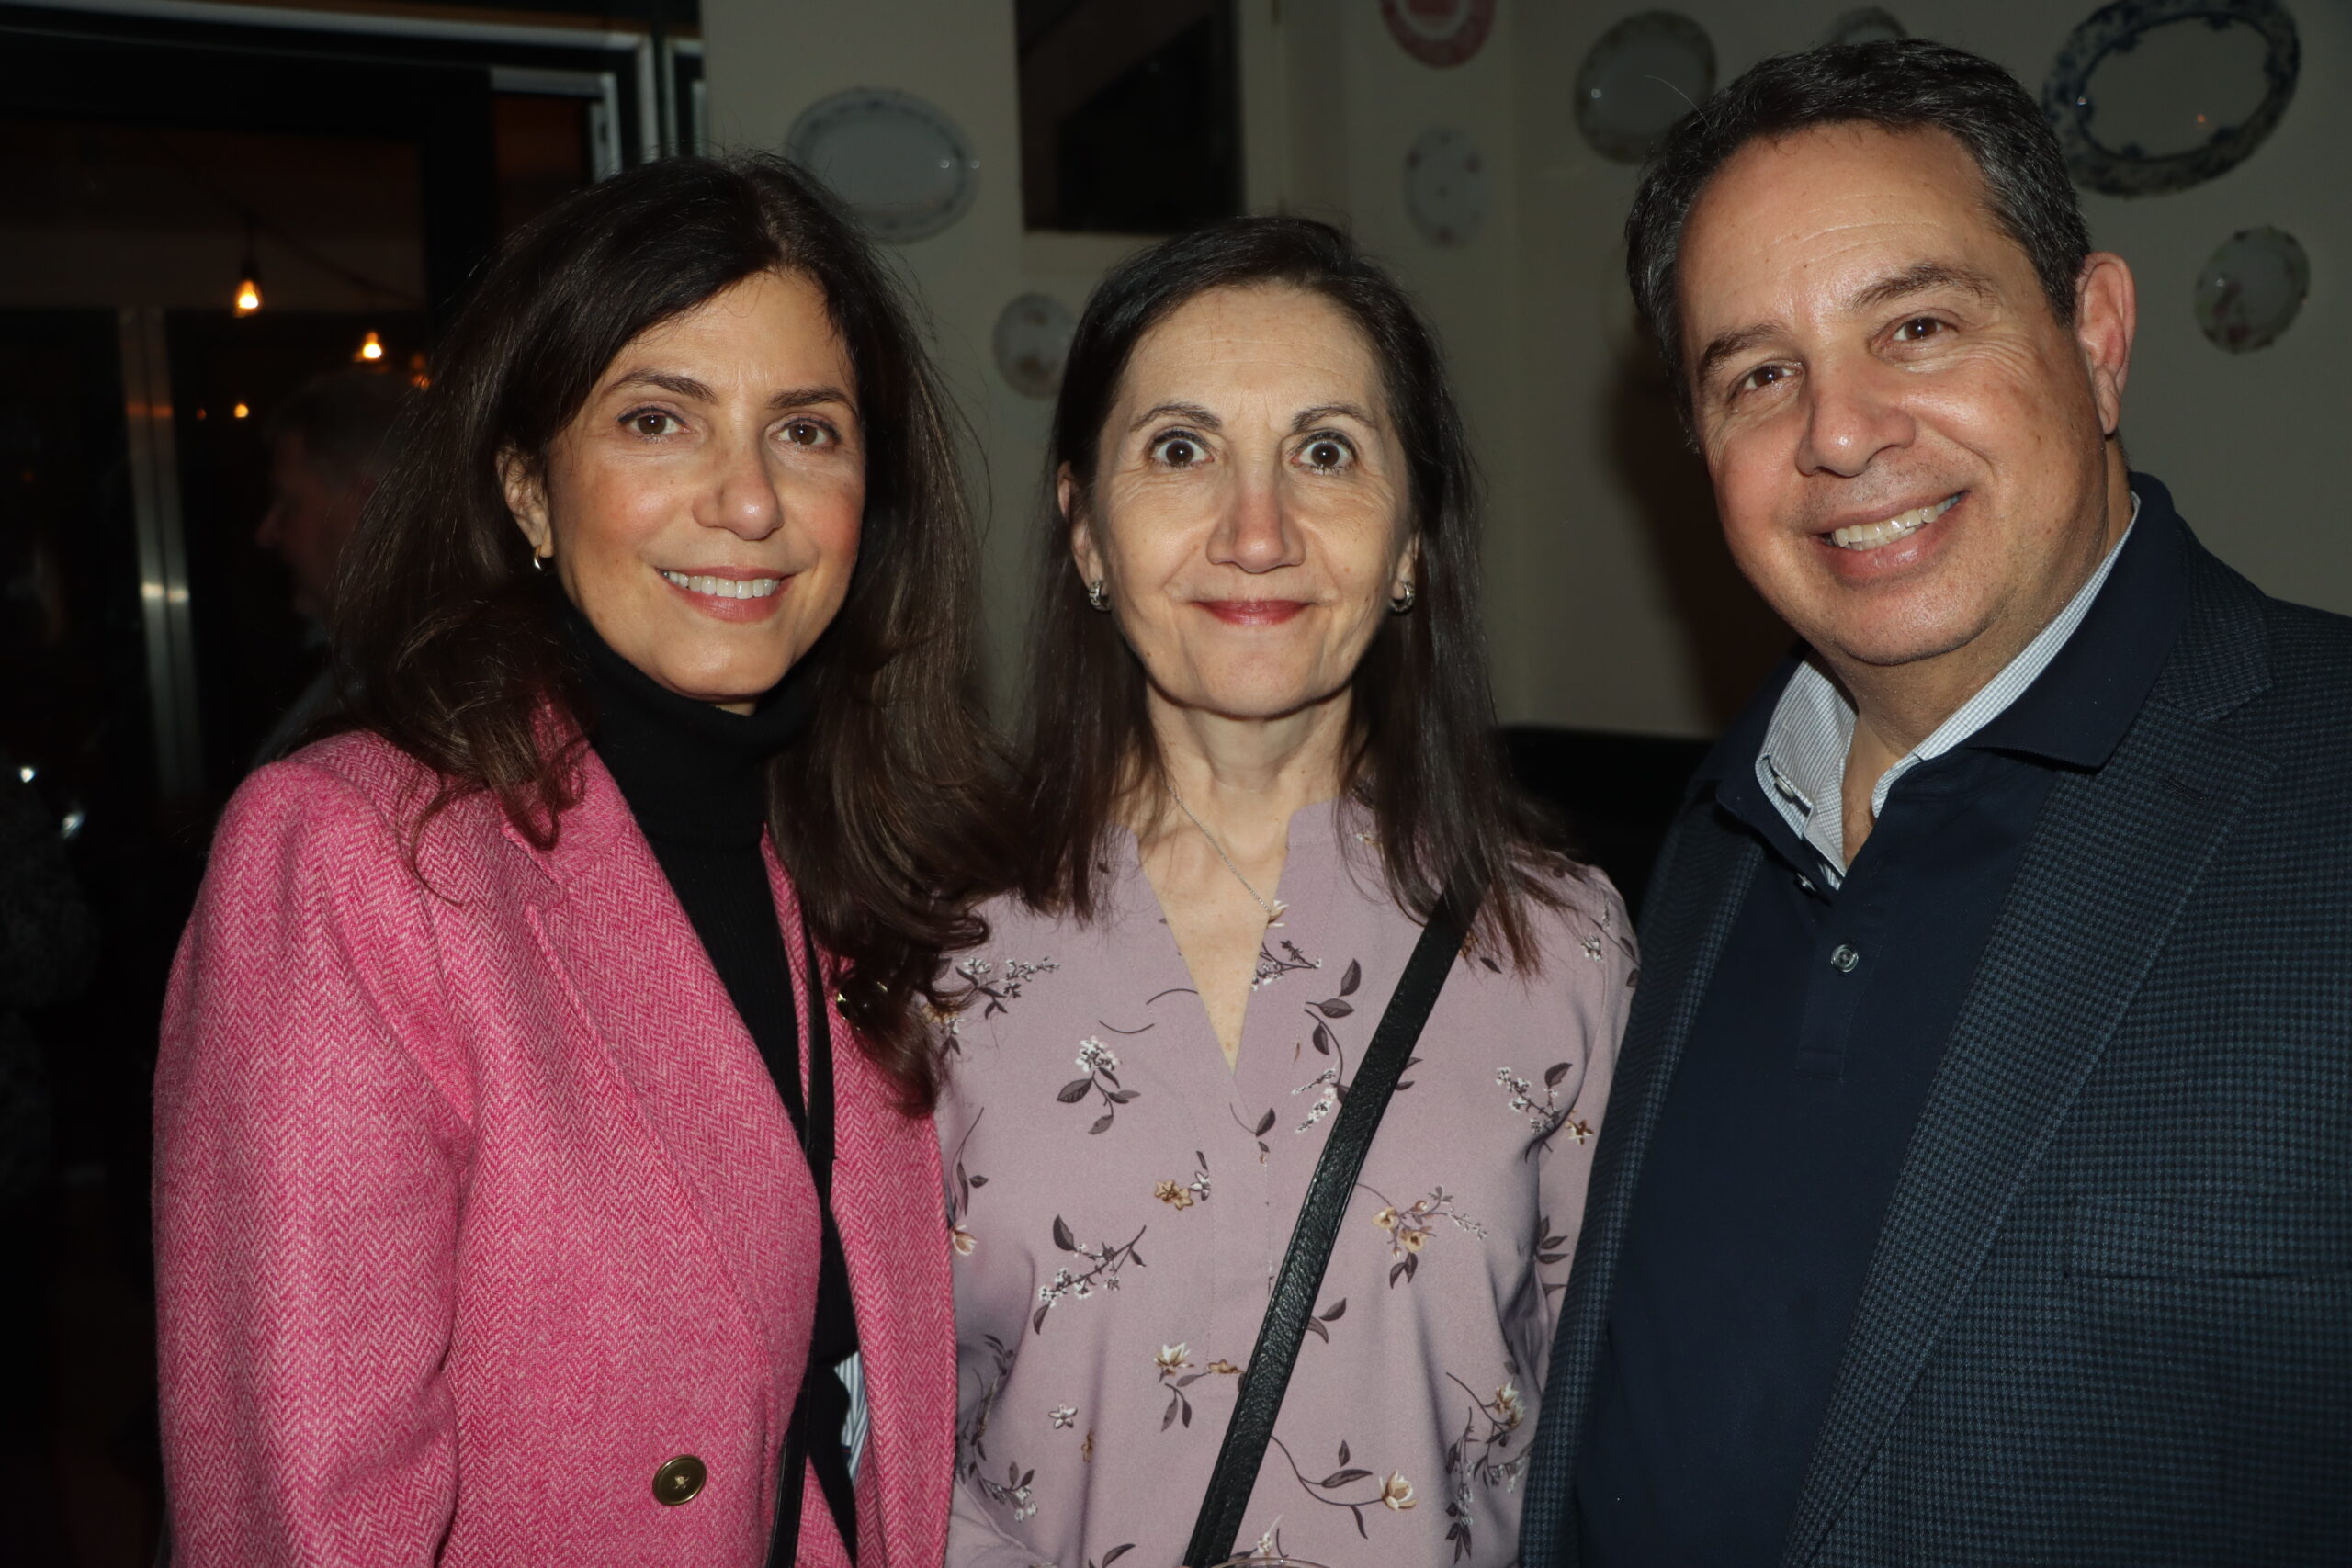 From left: Hon. Rosemarie Montalbano, Fran Rosato, and Joseph Rosato, president of the Brooklyn Bar Association at Kurtz’s retirement party.